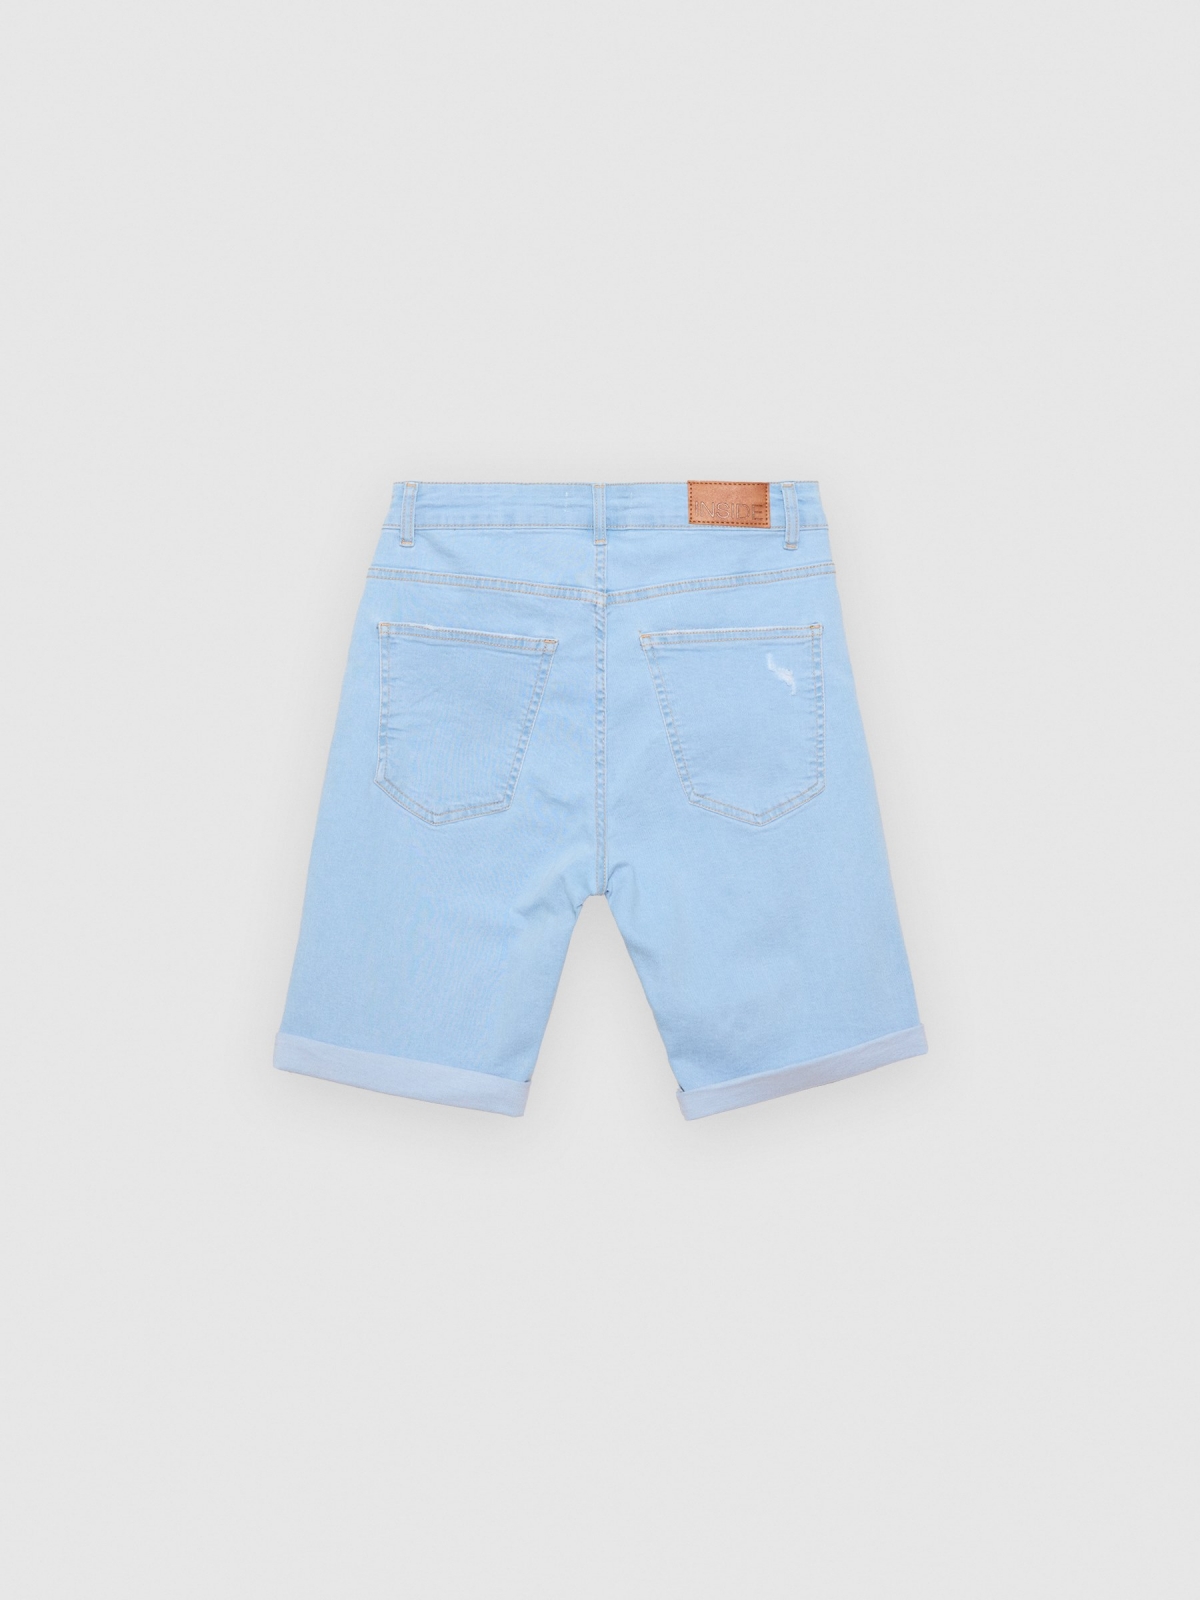 Blue skinny denim bermuda shorts blue detail view